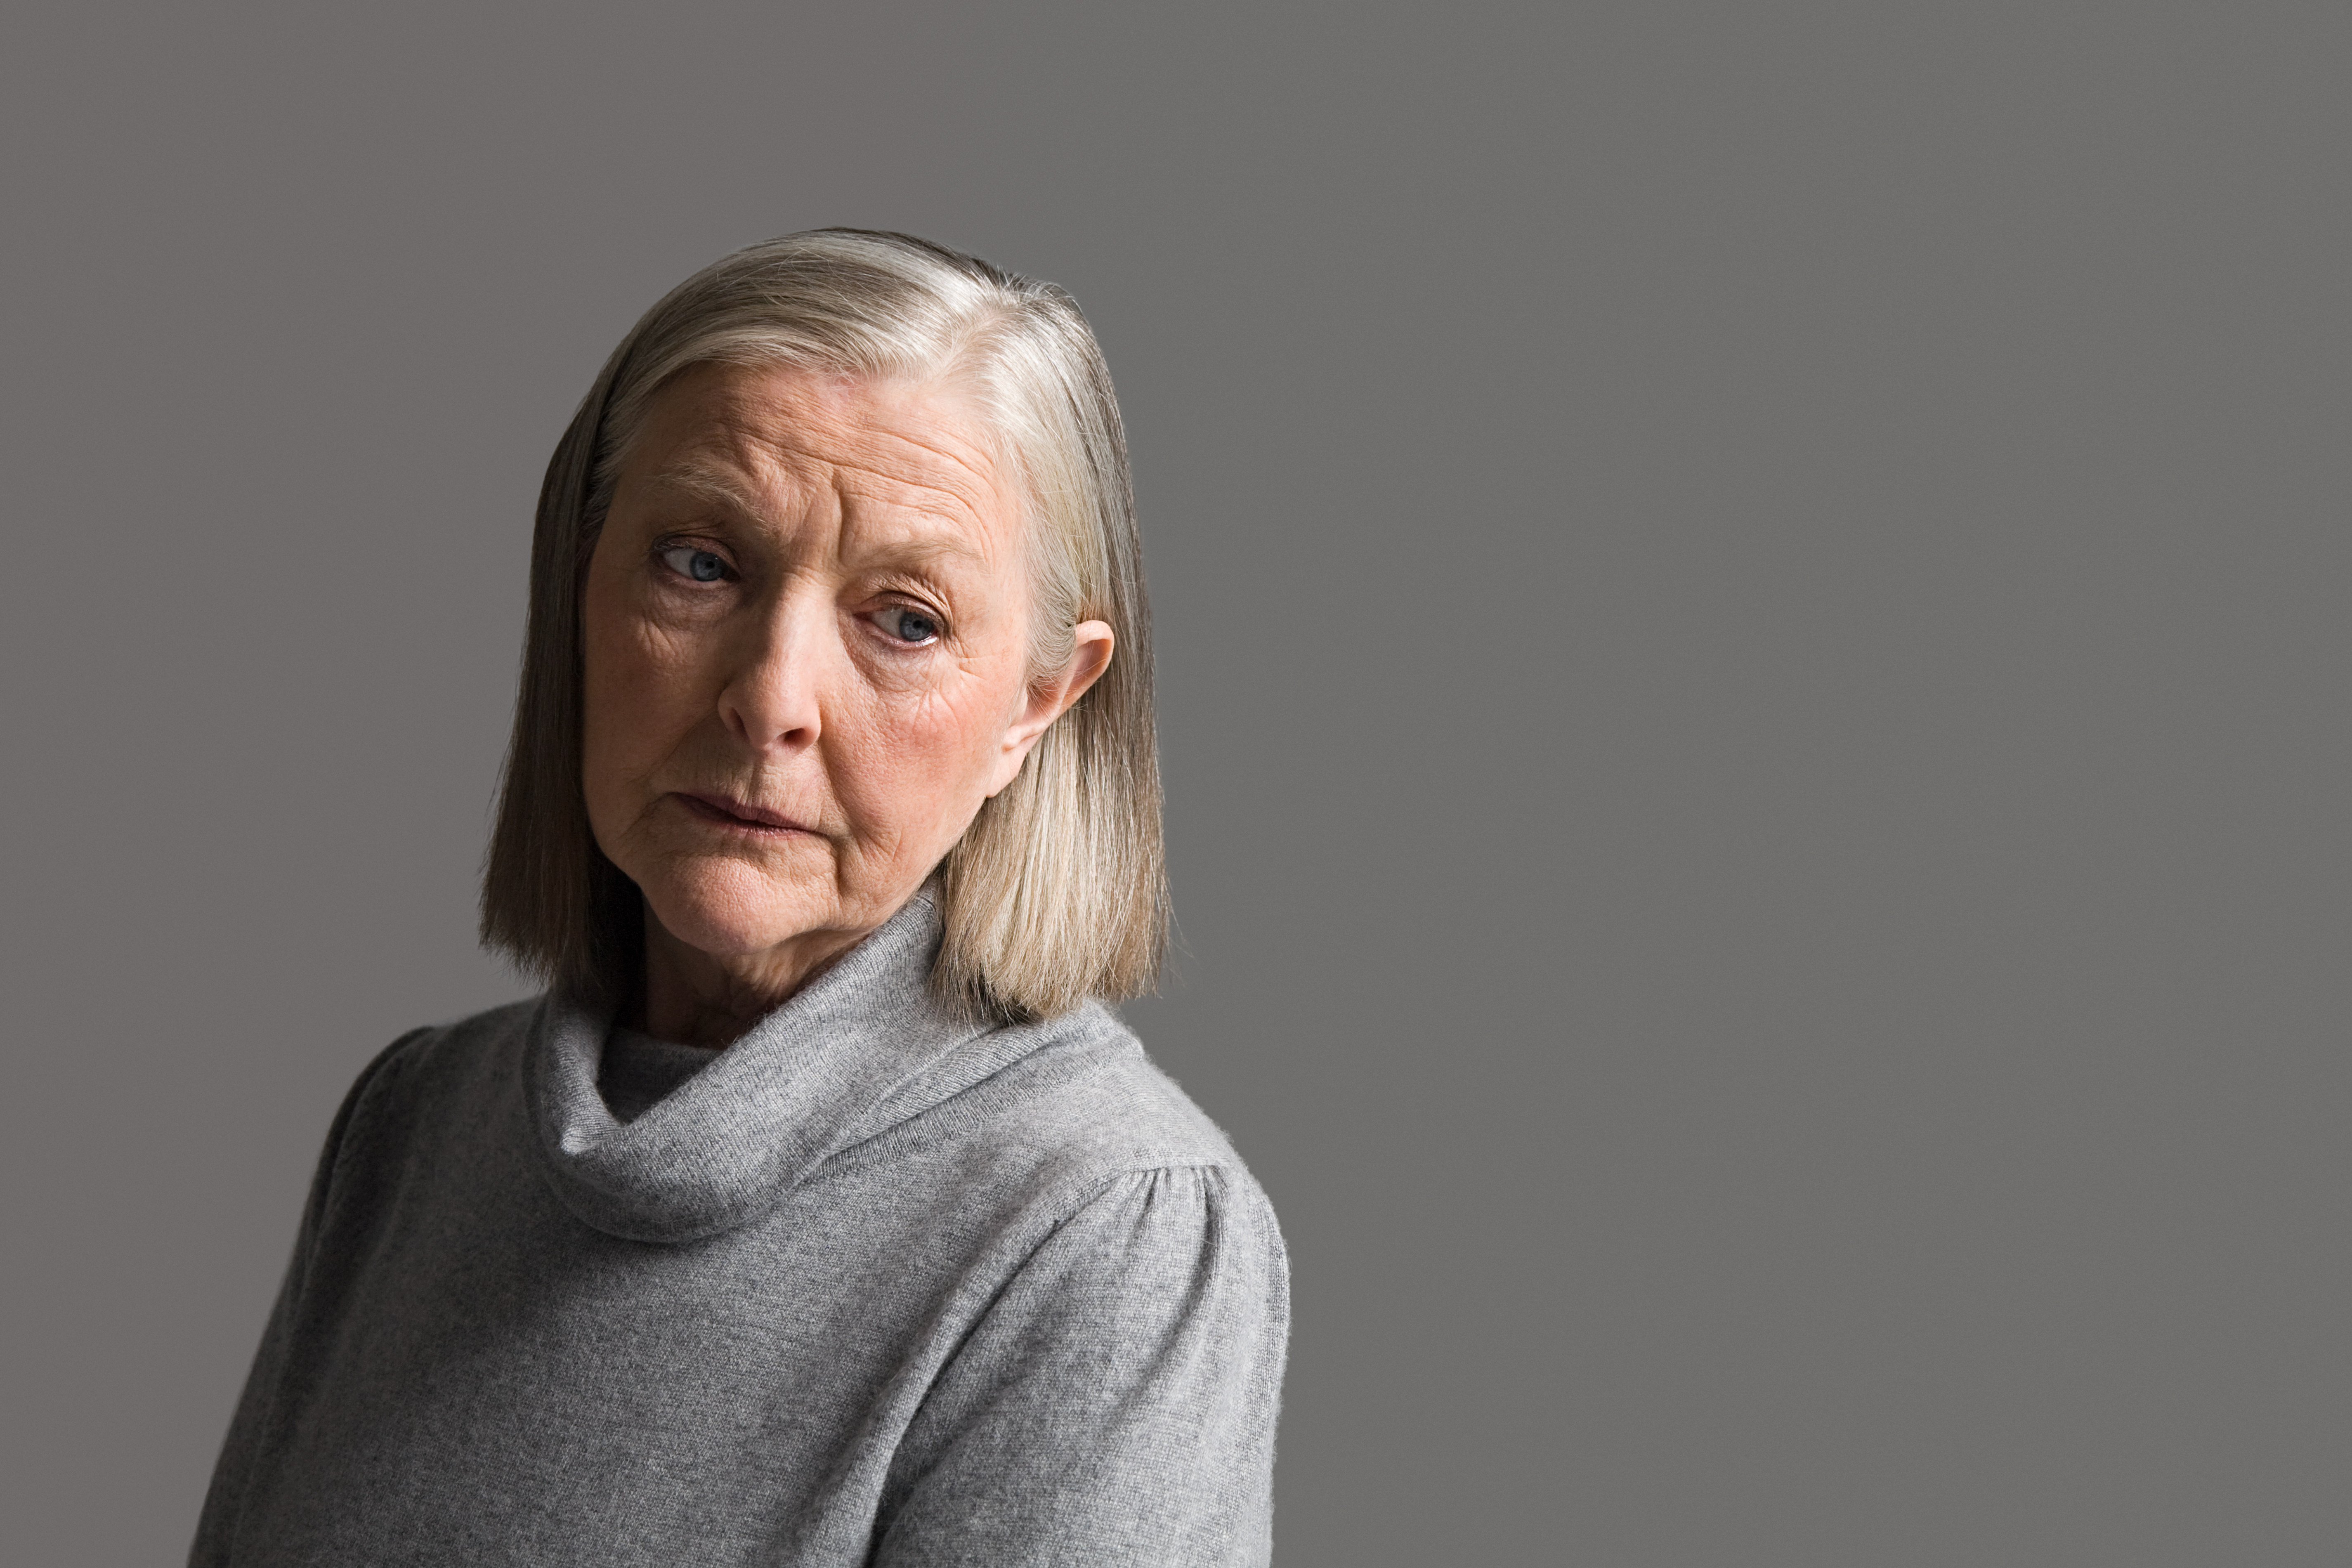 Senior woman looking worried | Source: Getty Images